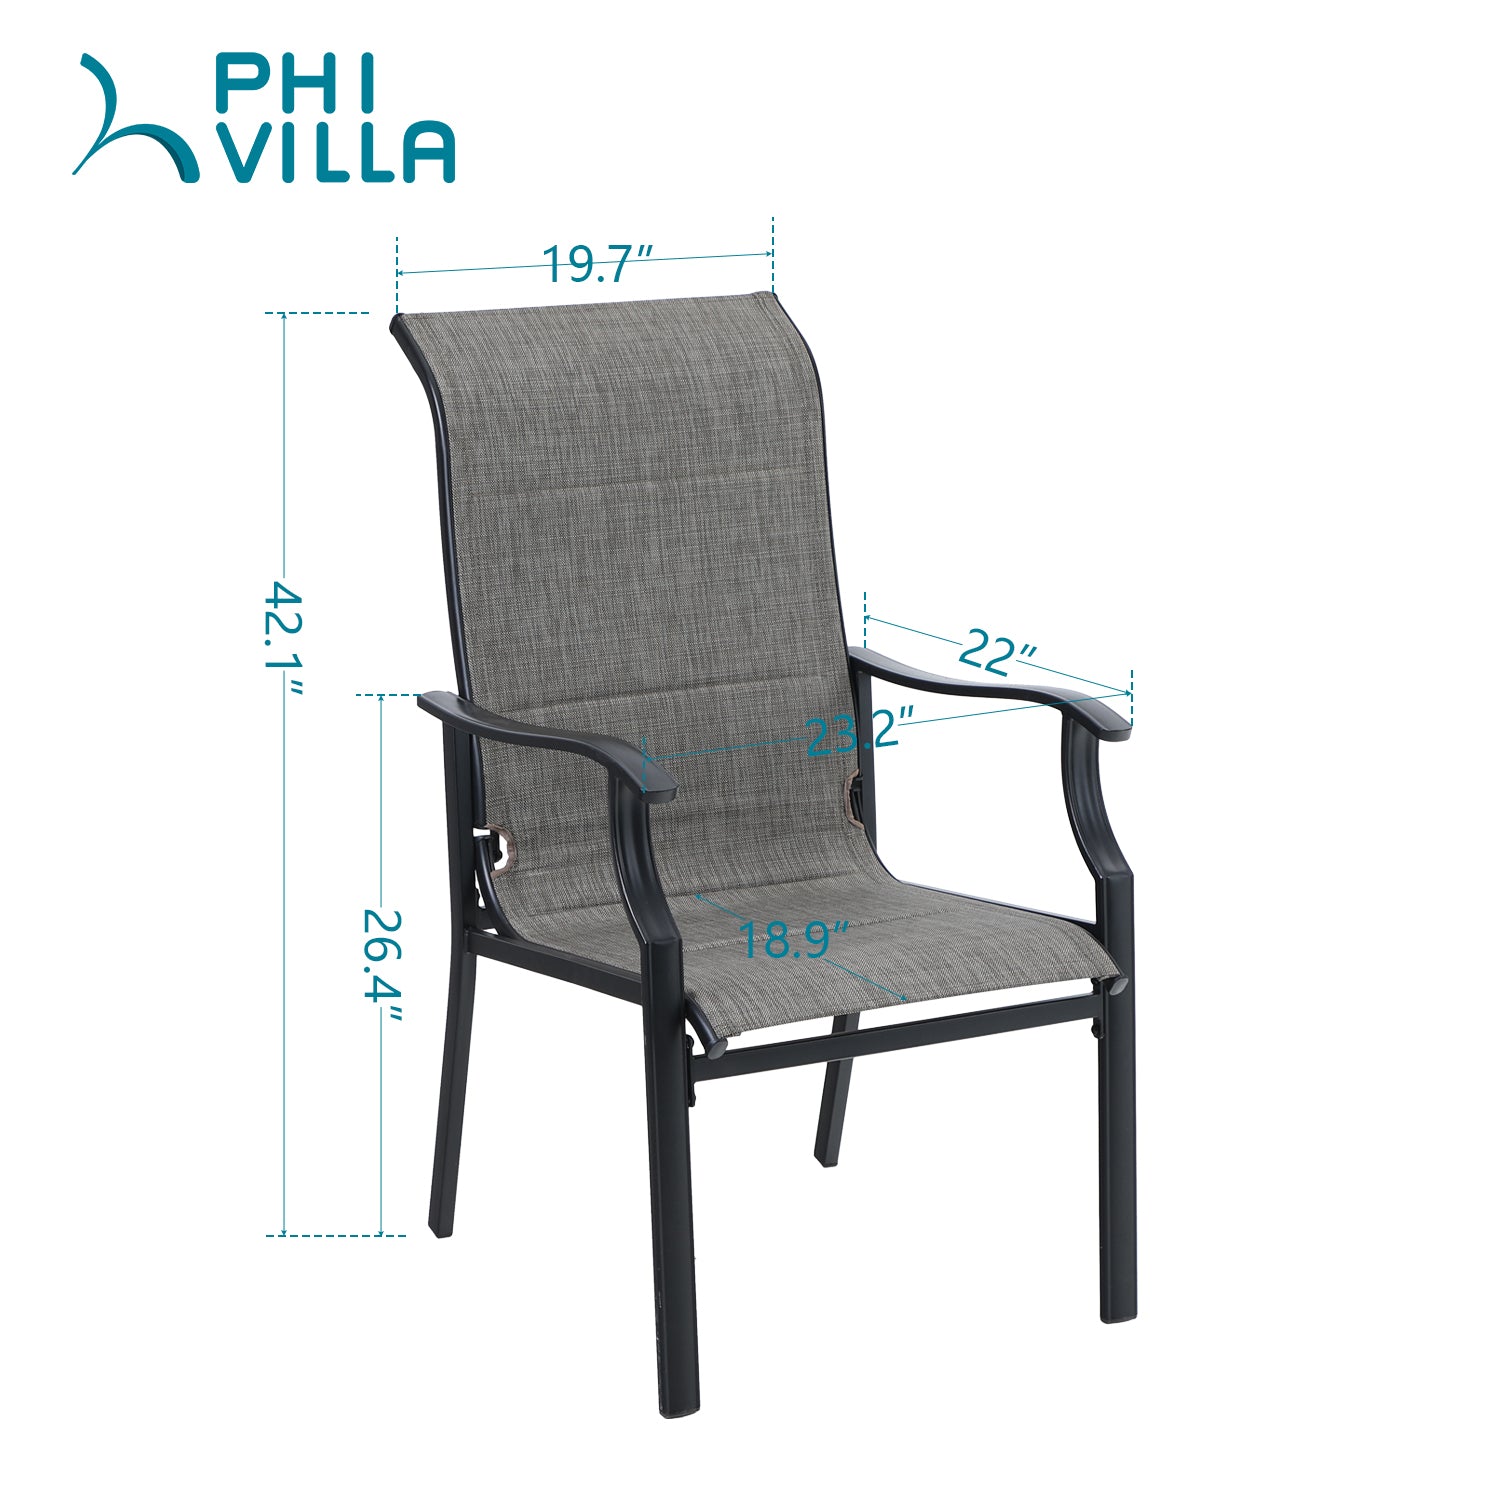 PHI VILLA 7-Piece Patio Dining Set Bowed-bar Table & High-back Textilene Chairs